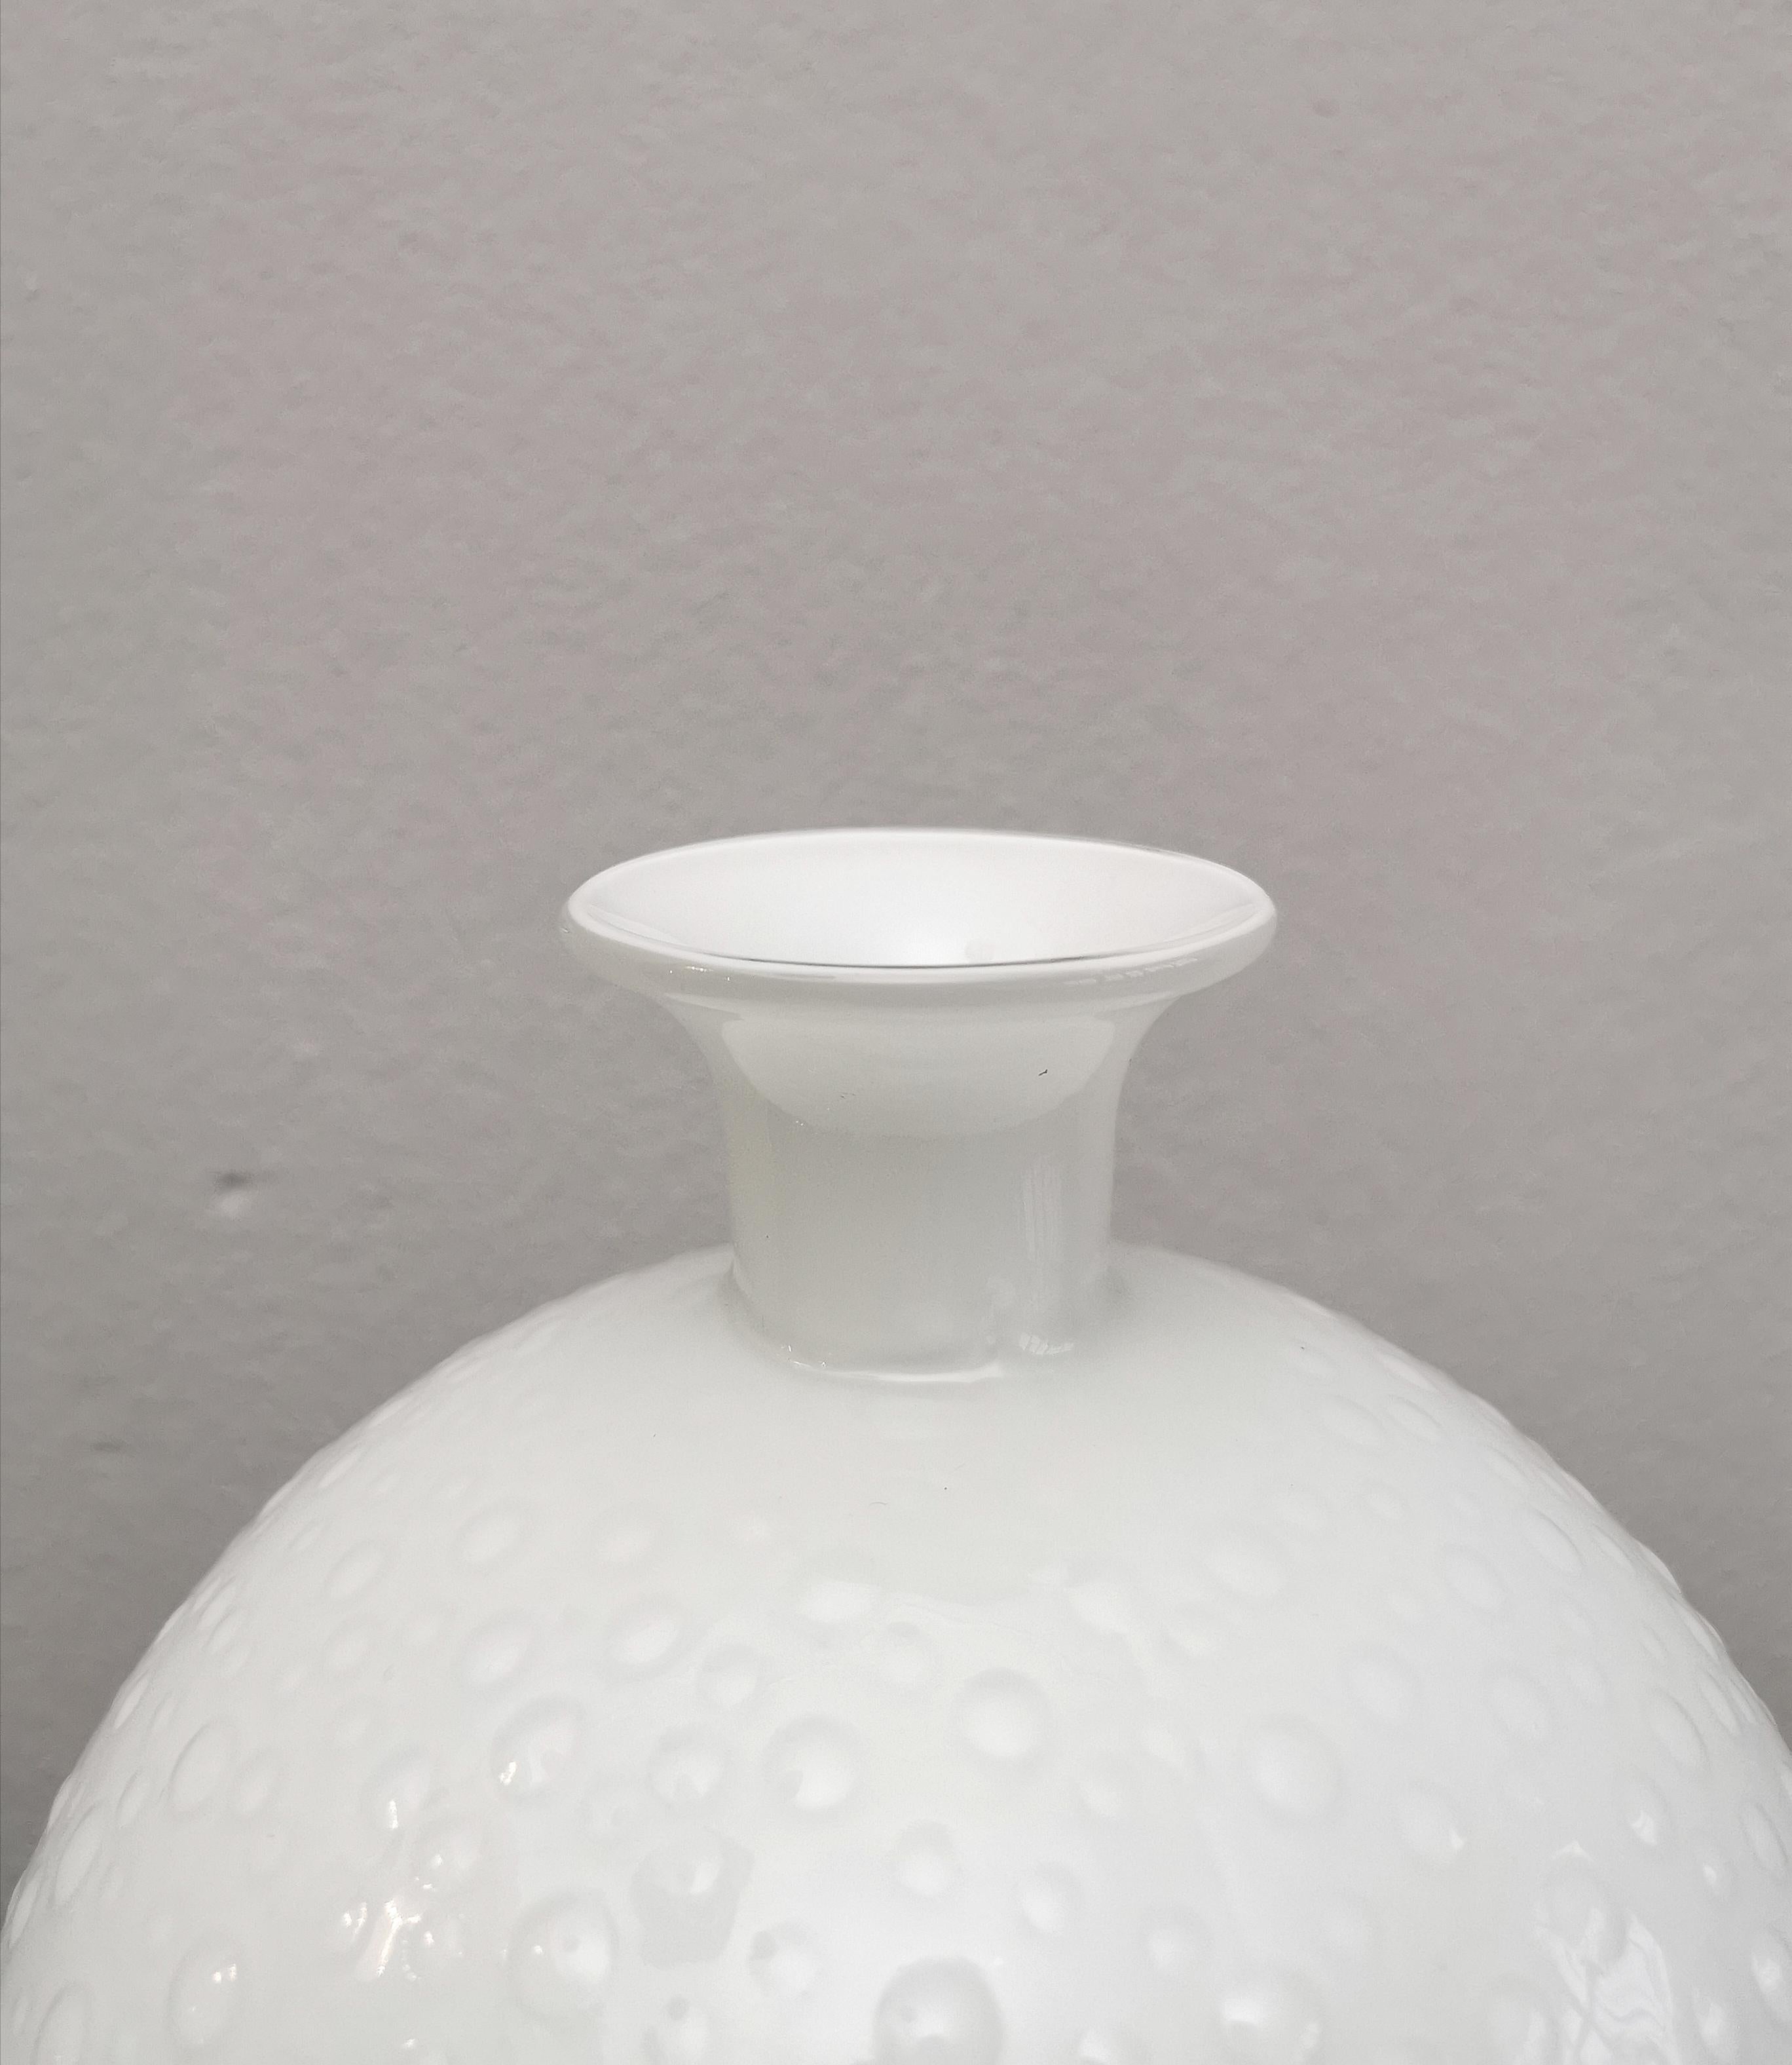 Mid-Century Modern Vase Vessel White Murano Glass Round Decorative Object Italian Design 1980s For Sale